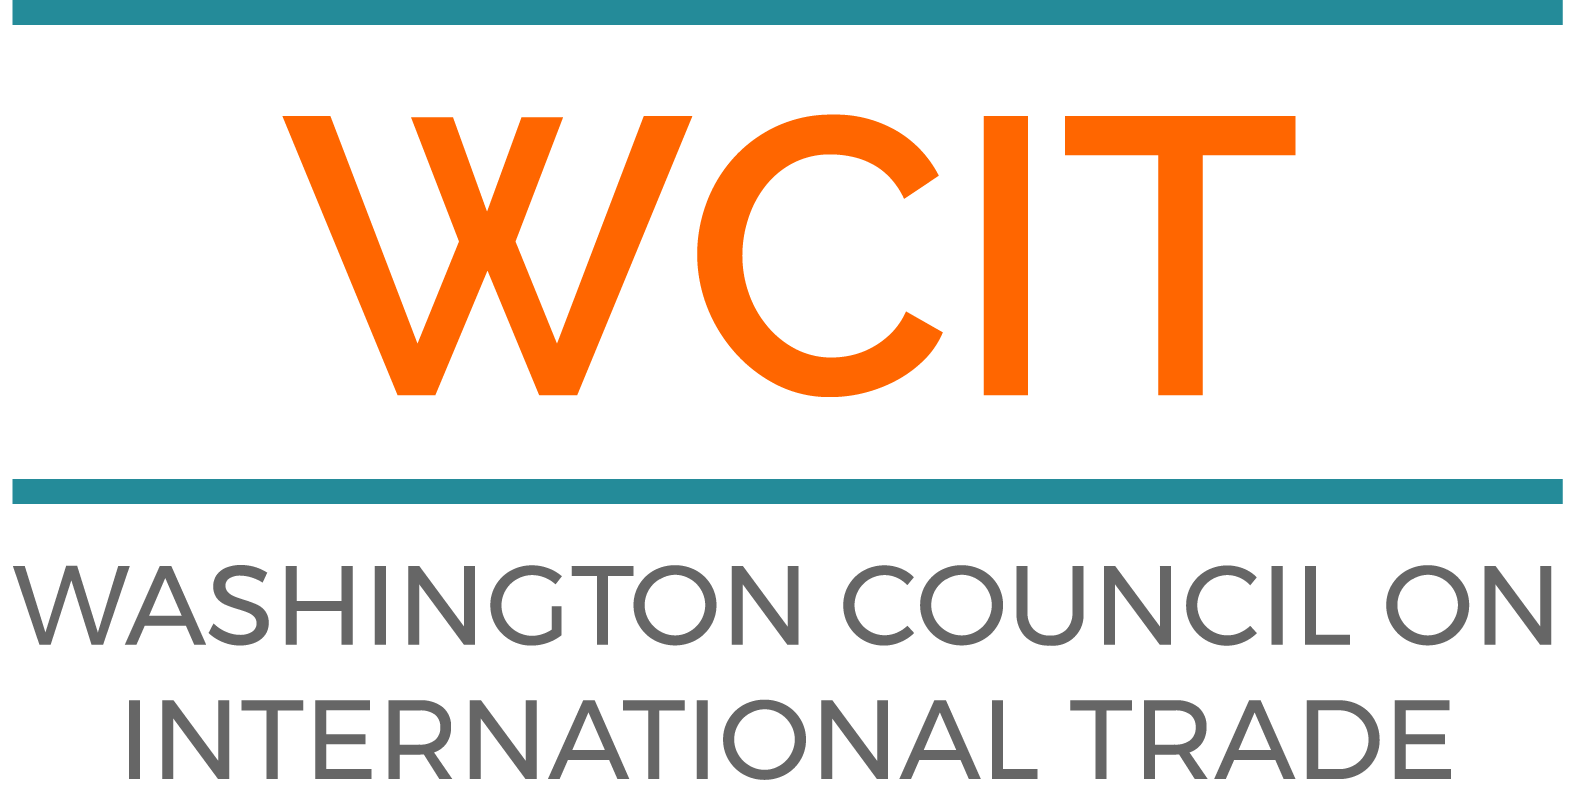 WCIT — Washington Council on International Trade